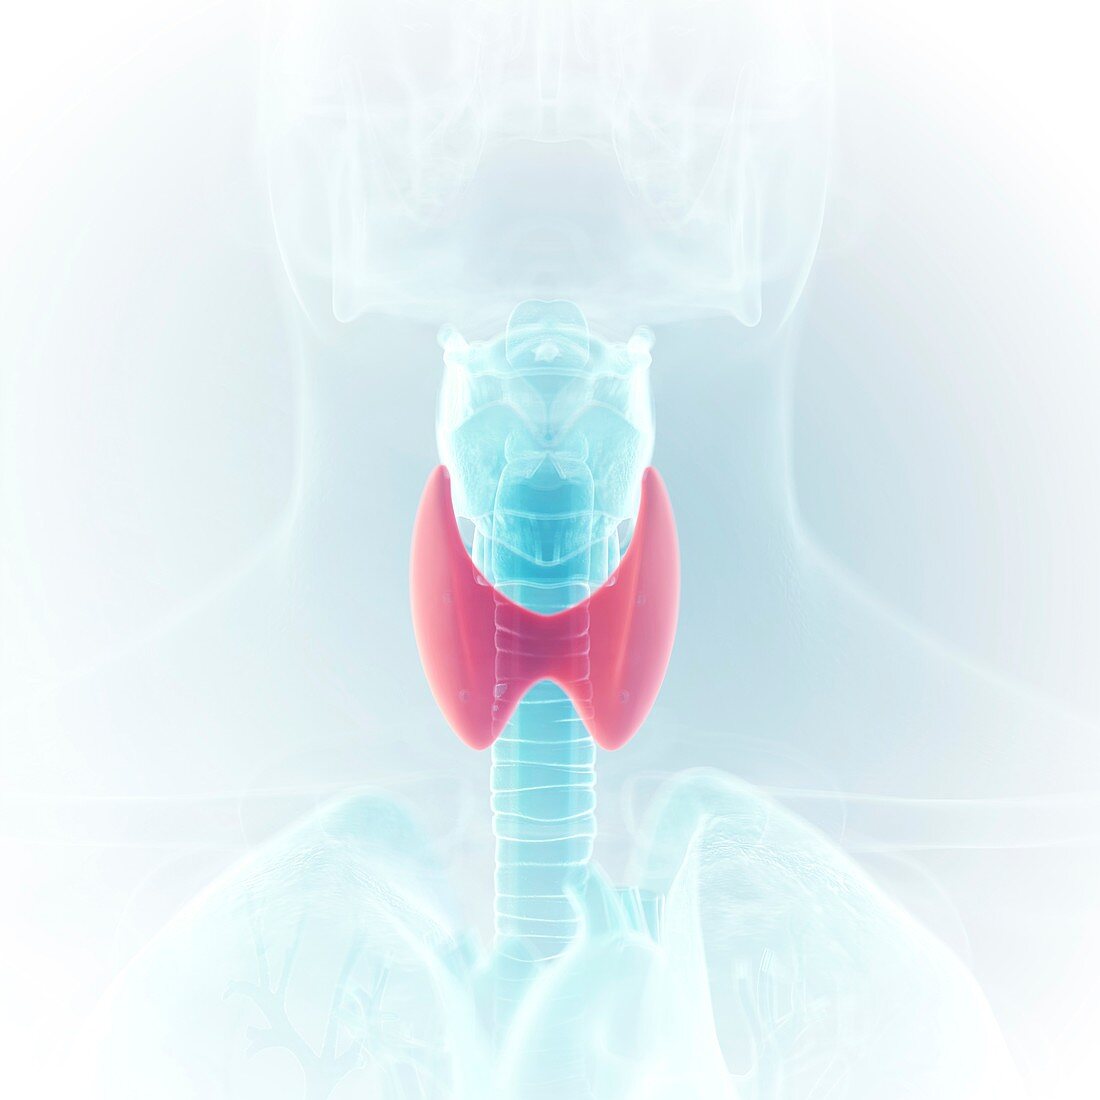 Illustration of the thyroid